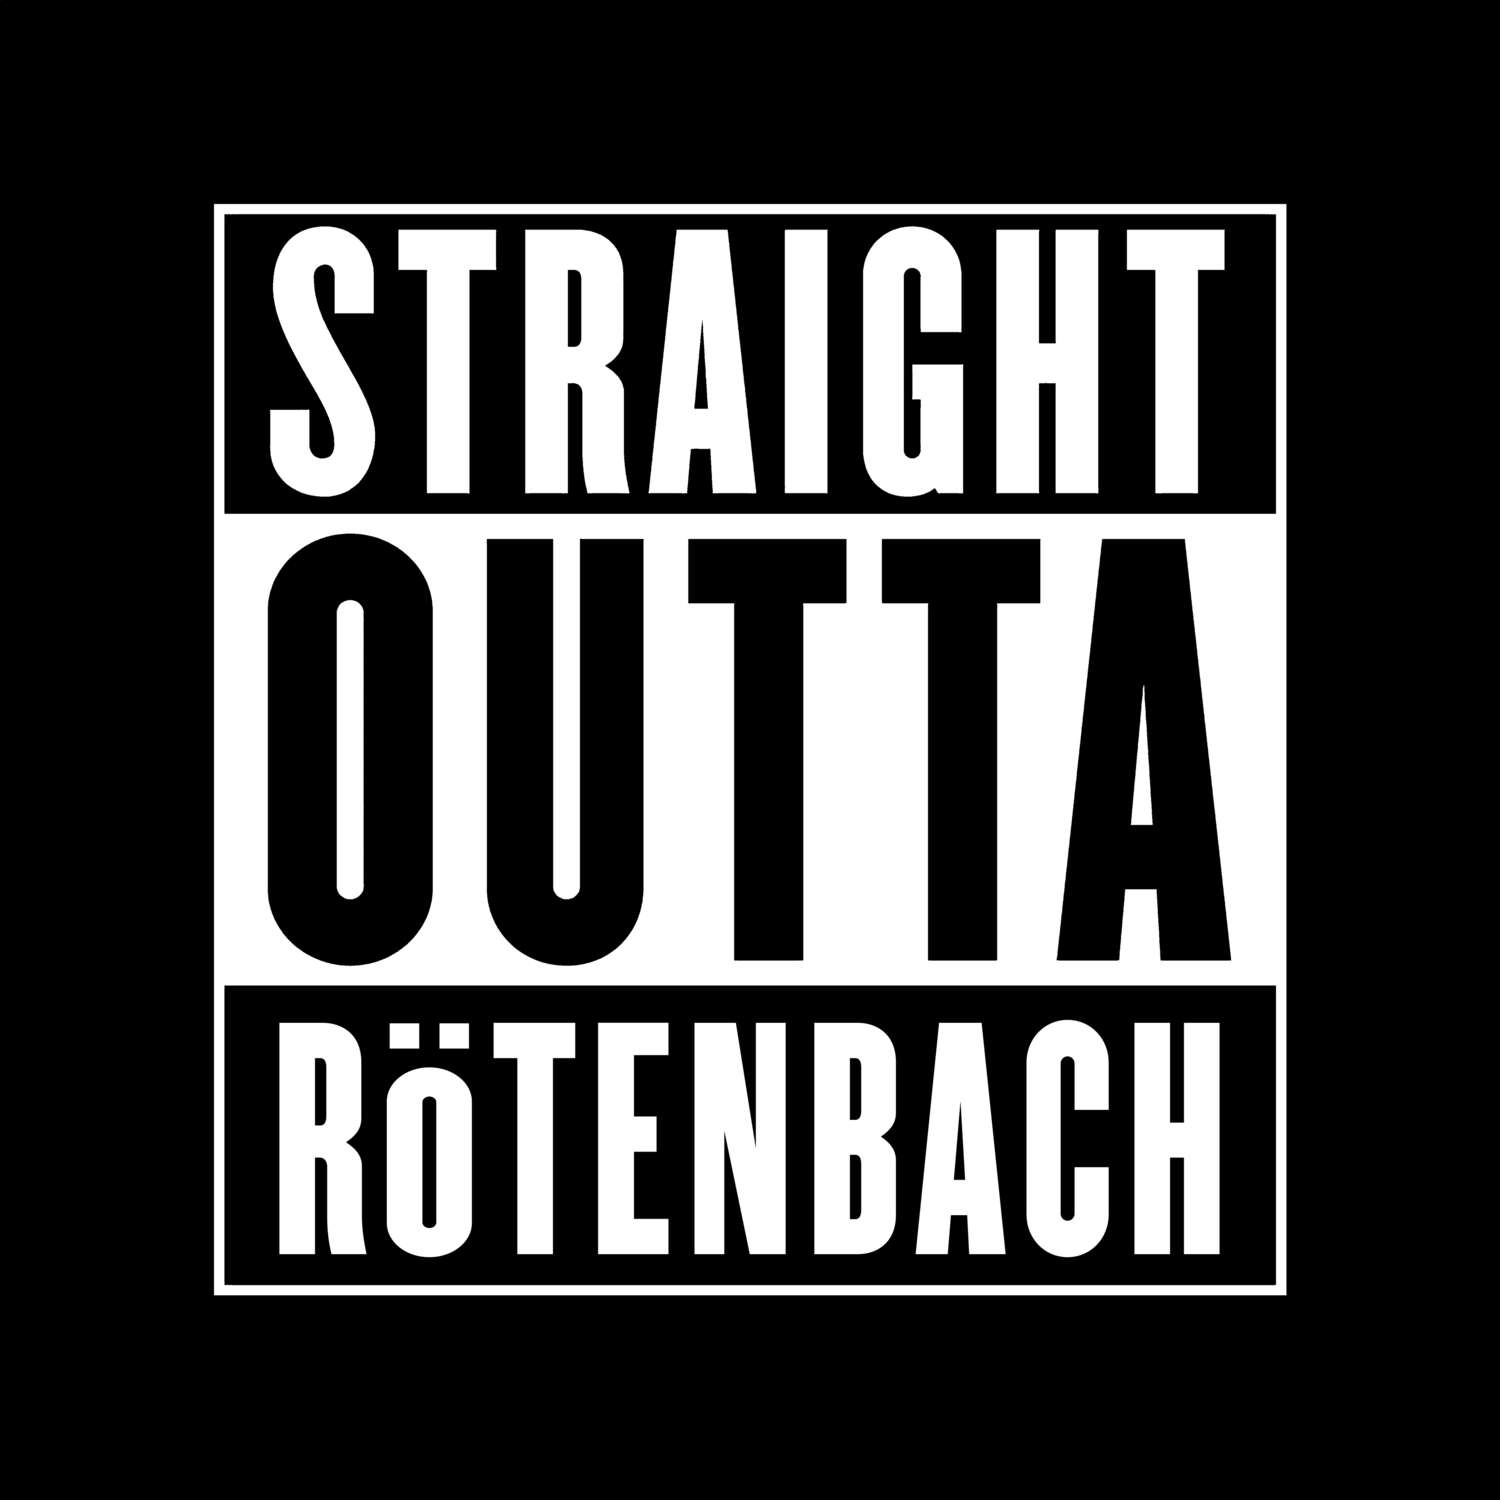 Rötenbach T-Shirt »Straight Outta«